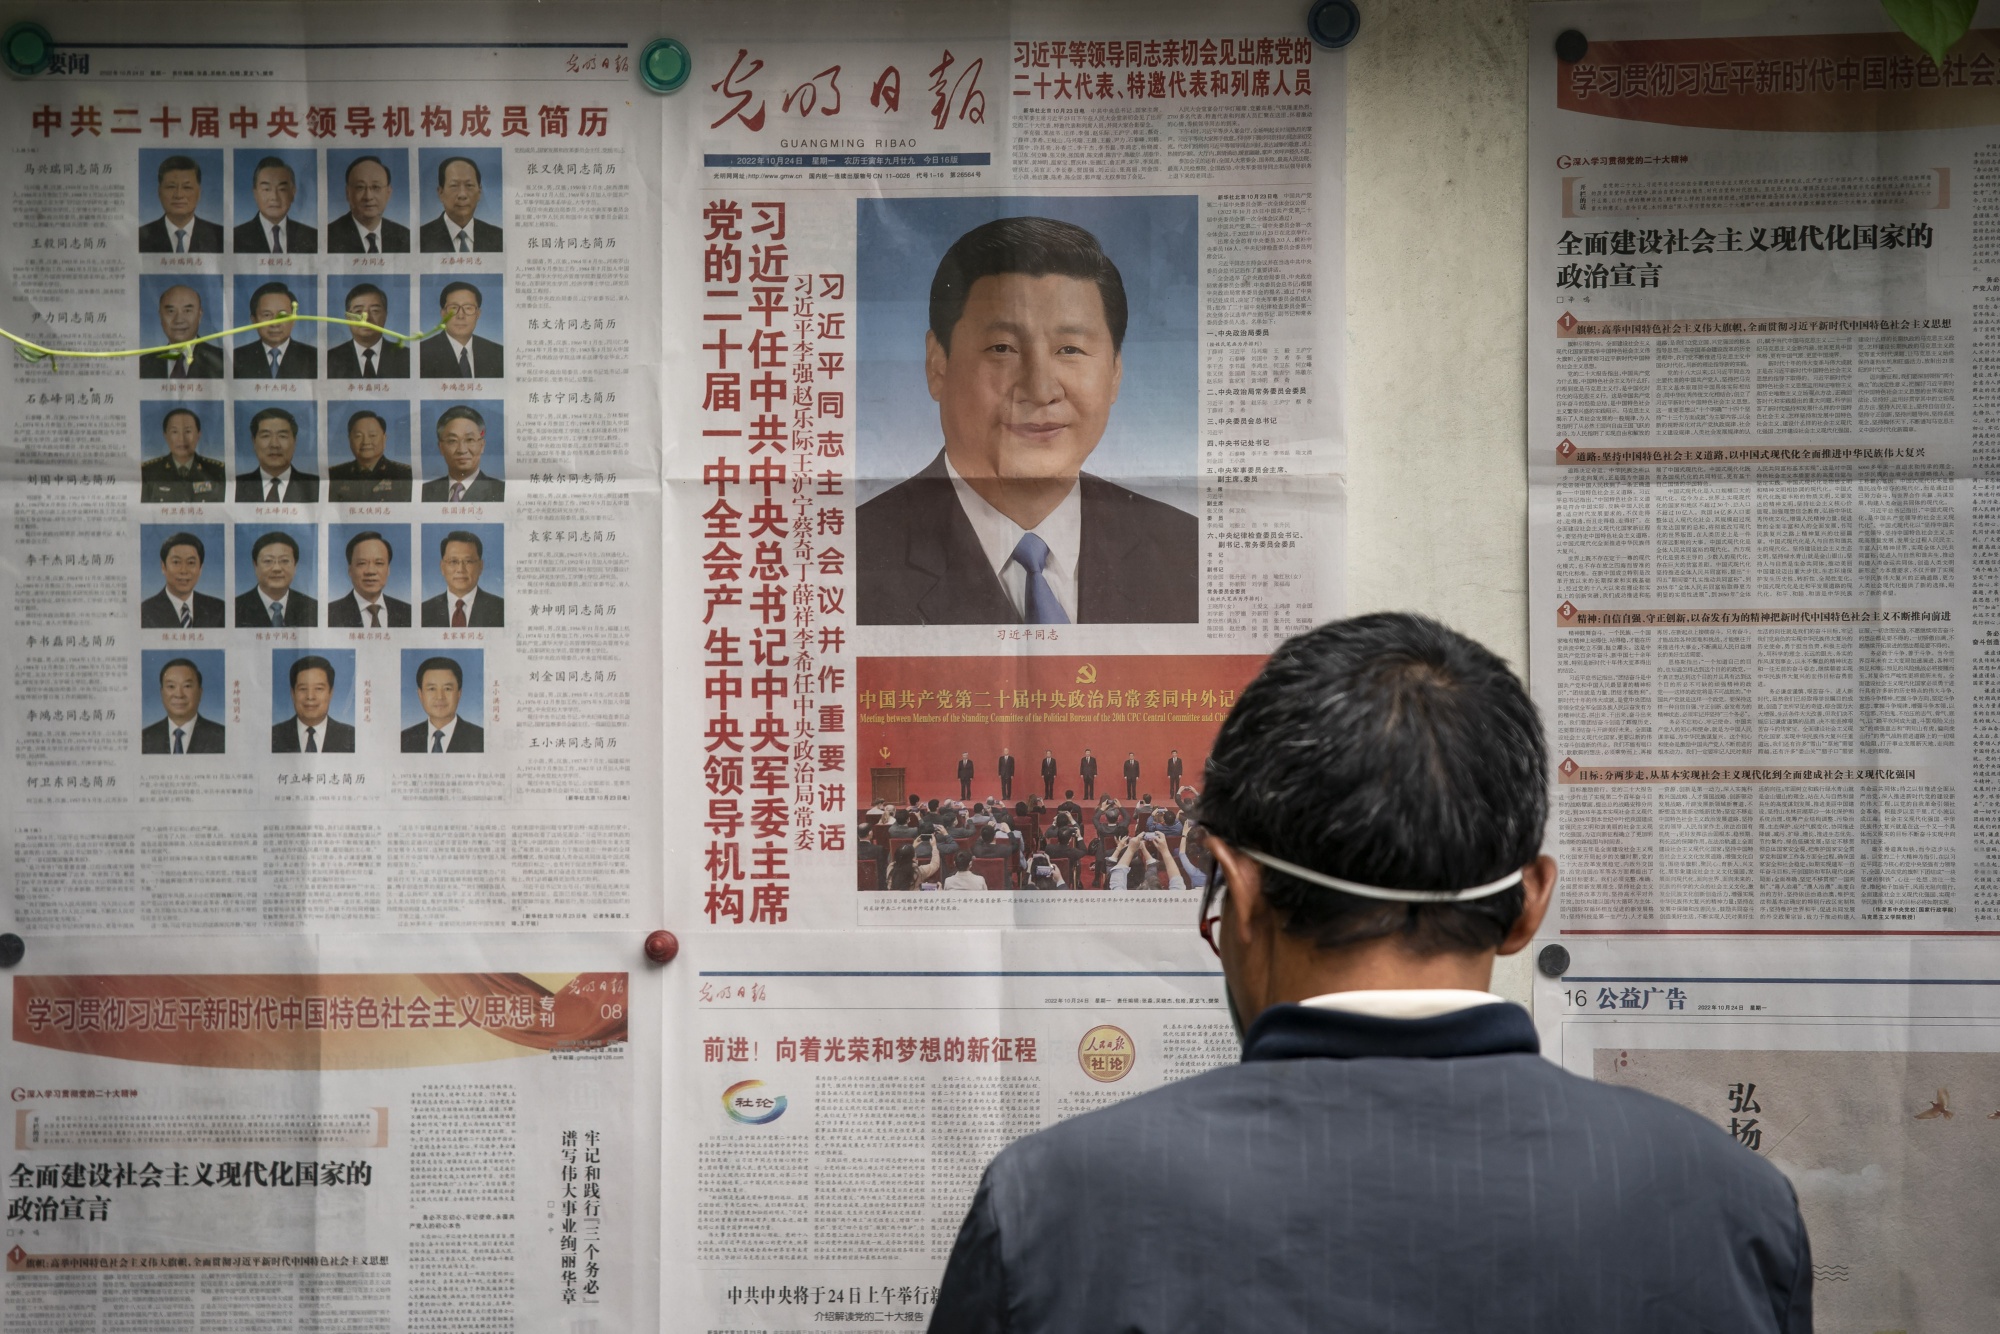 Xi Jinping's Pivot: How He Went From Zero to Hero - Bloomberg